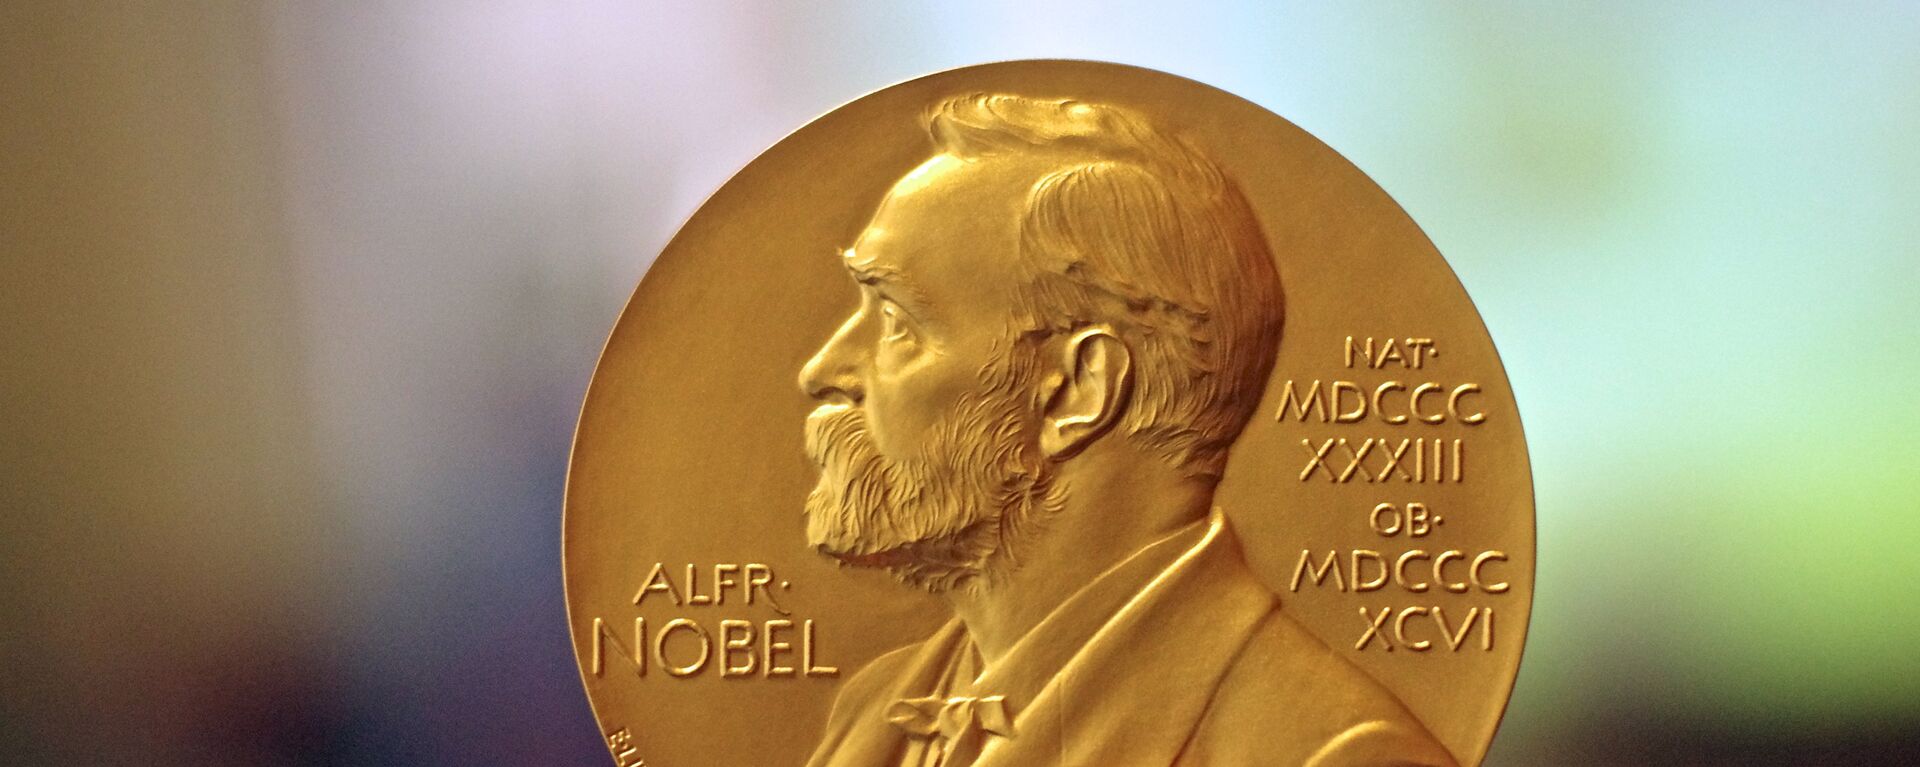 Premio Nobel - Sputnik Mundo, 1920, 06.10.2017